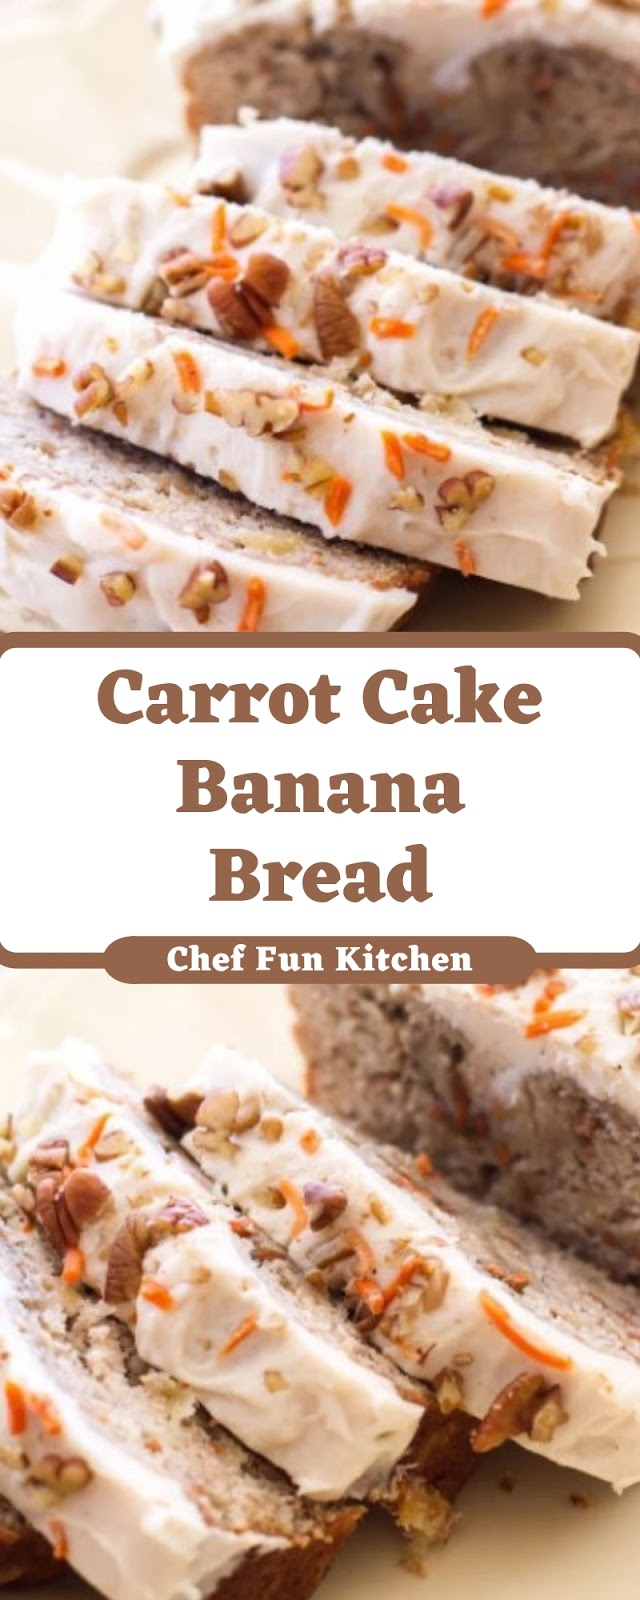 Carrot Cake Banana Bread